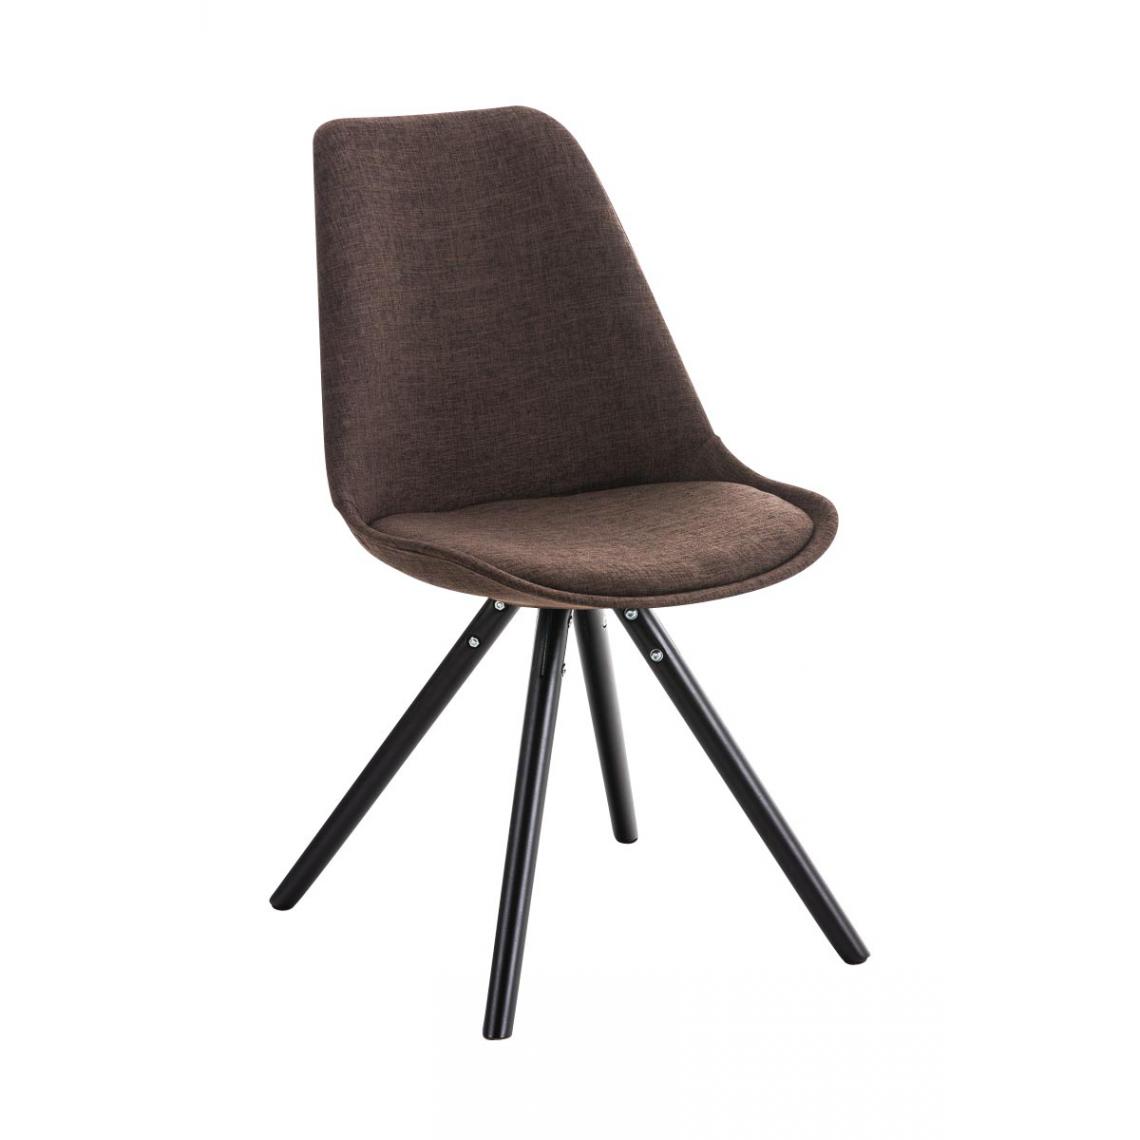 Icaverne - Superbe Chaise ronde gamme Manille noire couleur marron - Chaises